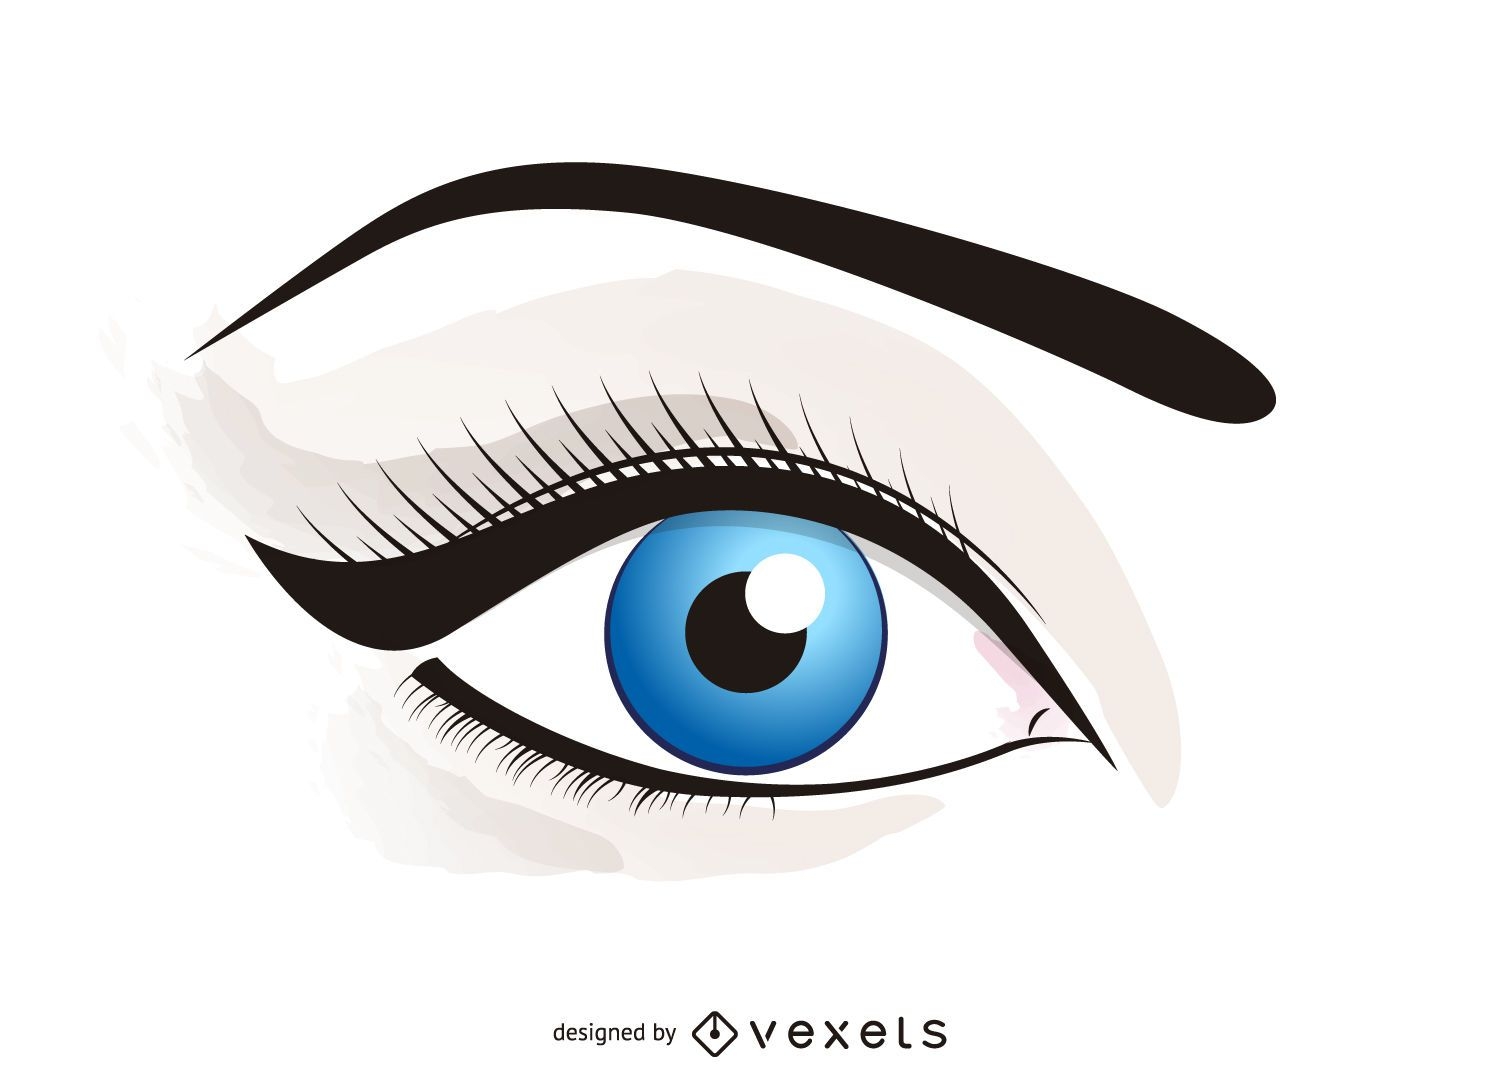 Illustriertes Auge mit Make-up